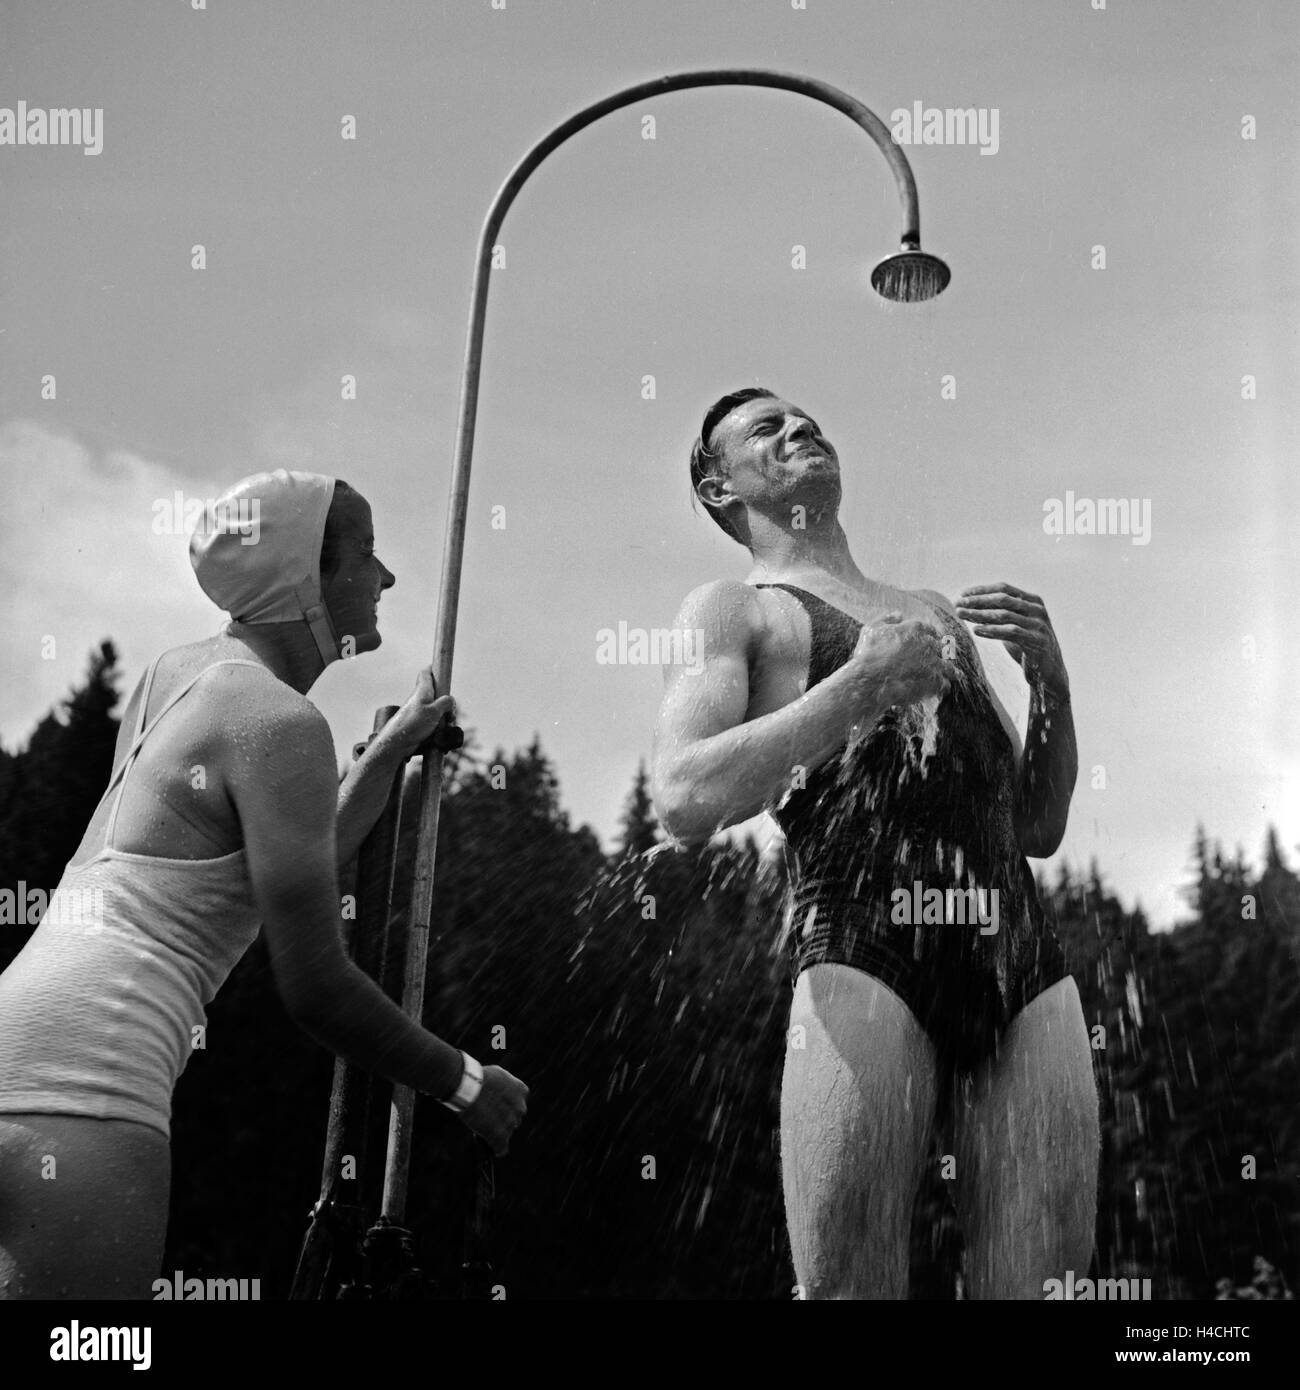 Eine junges Paar nimmt eine kalte Dusche en einem Freibad im Schwarzwald, Deutschland 1930er Jahre. Una joven pareja disfrutando de una ducha fría en una piscina al aire libre en la Selva Negra, Alemania 1930. Foto de stock